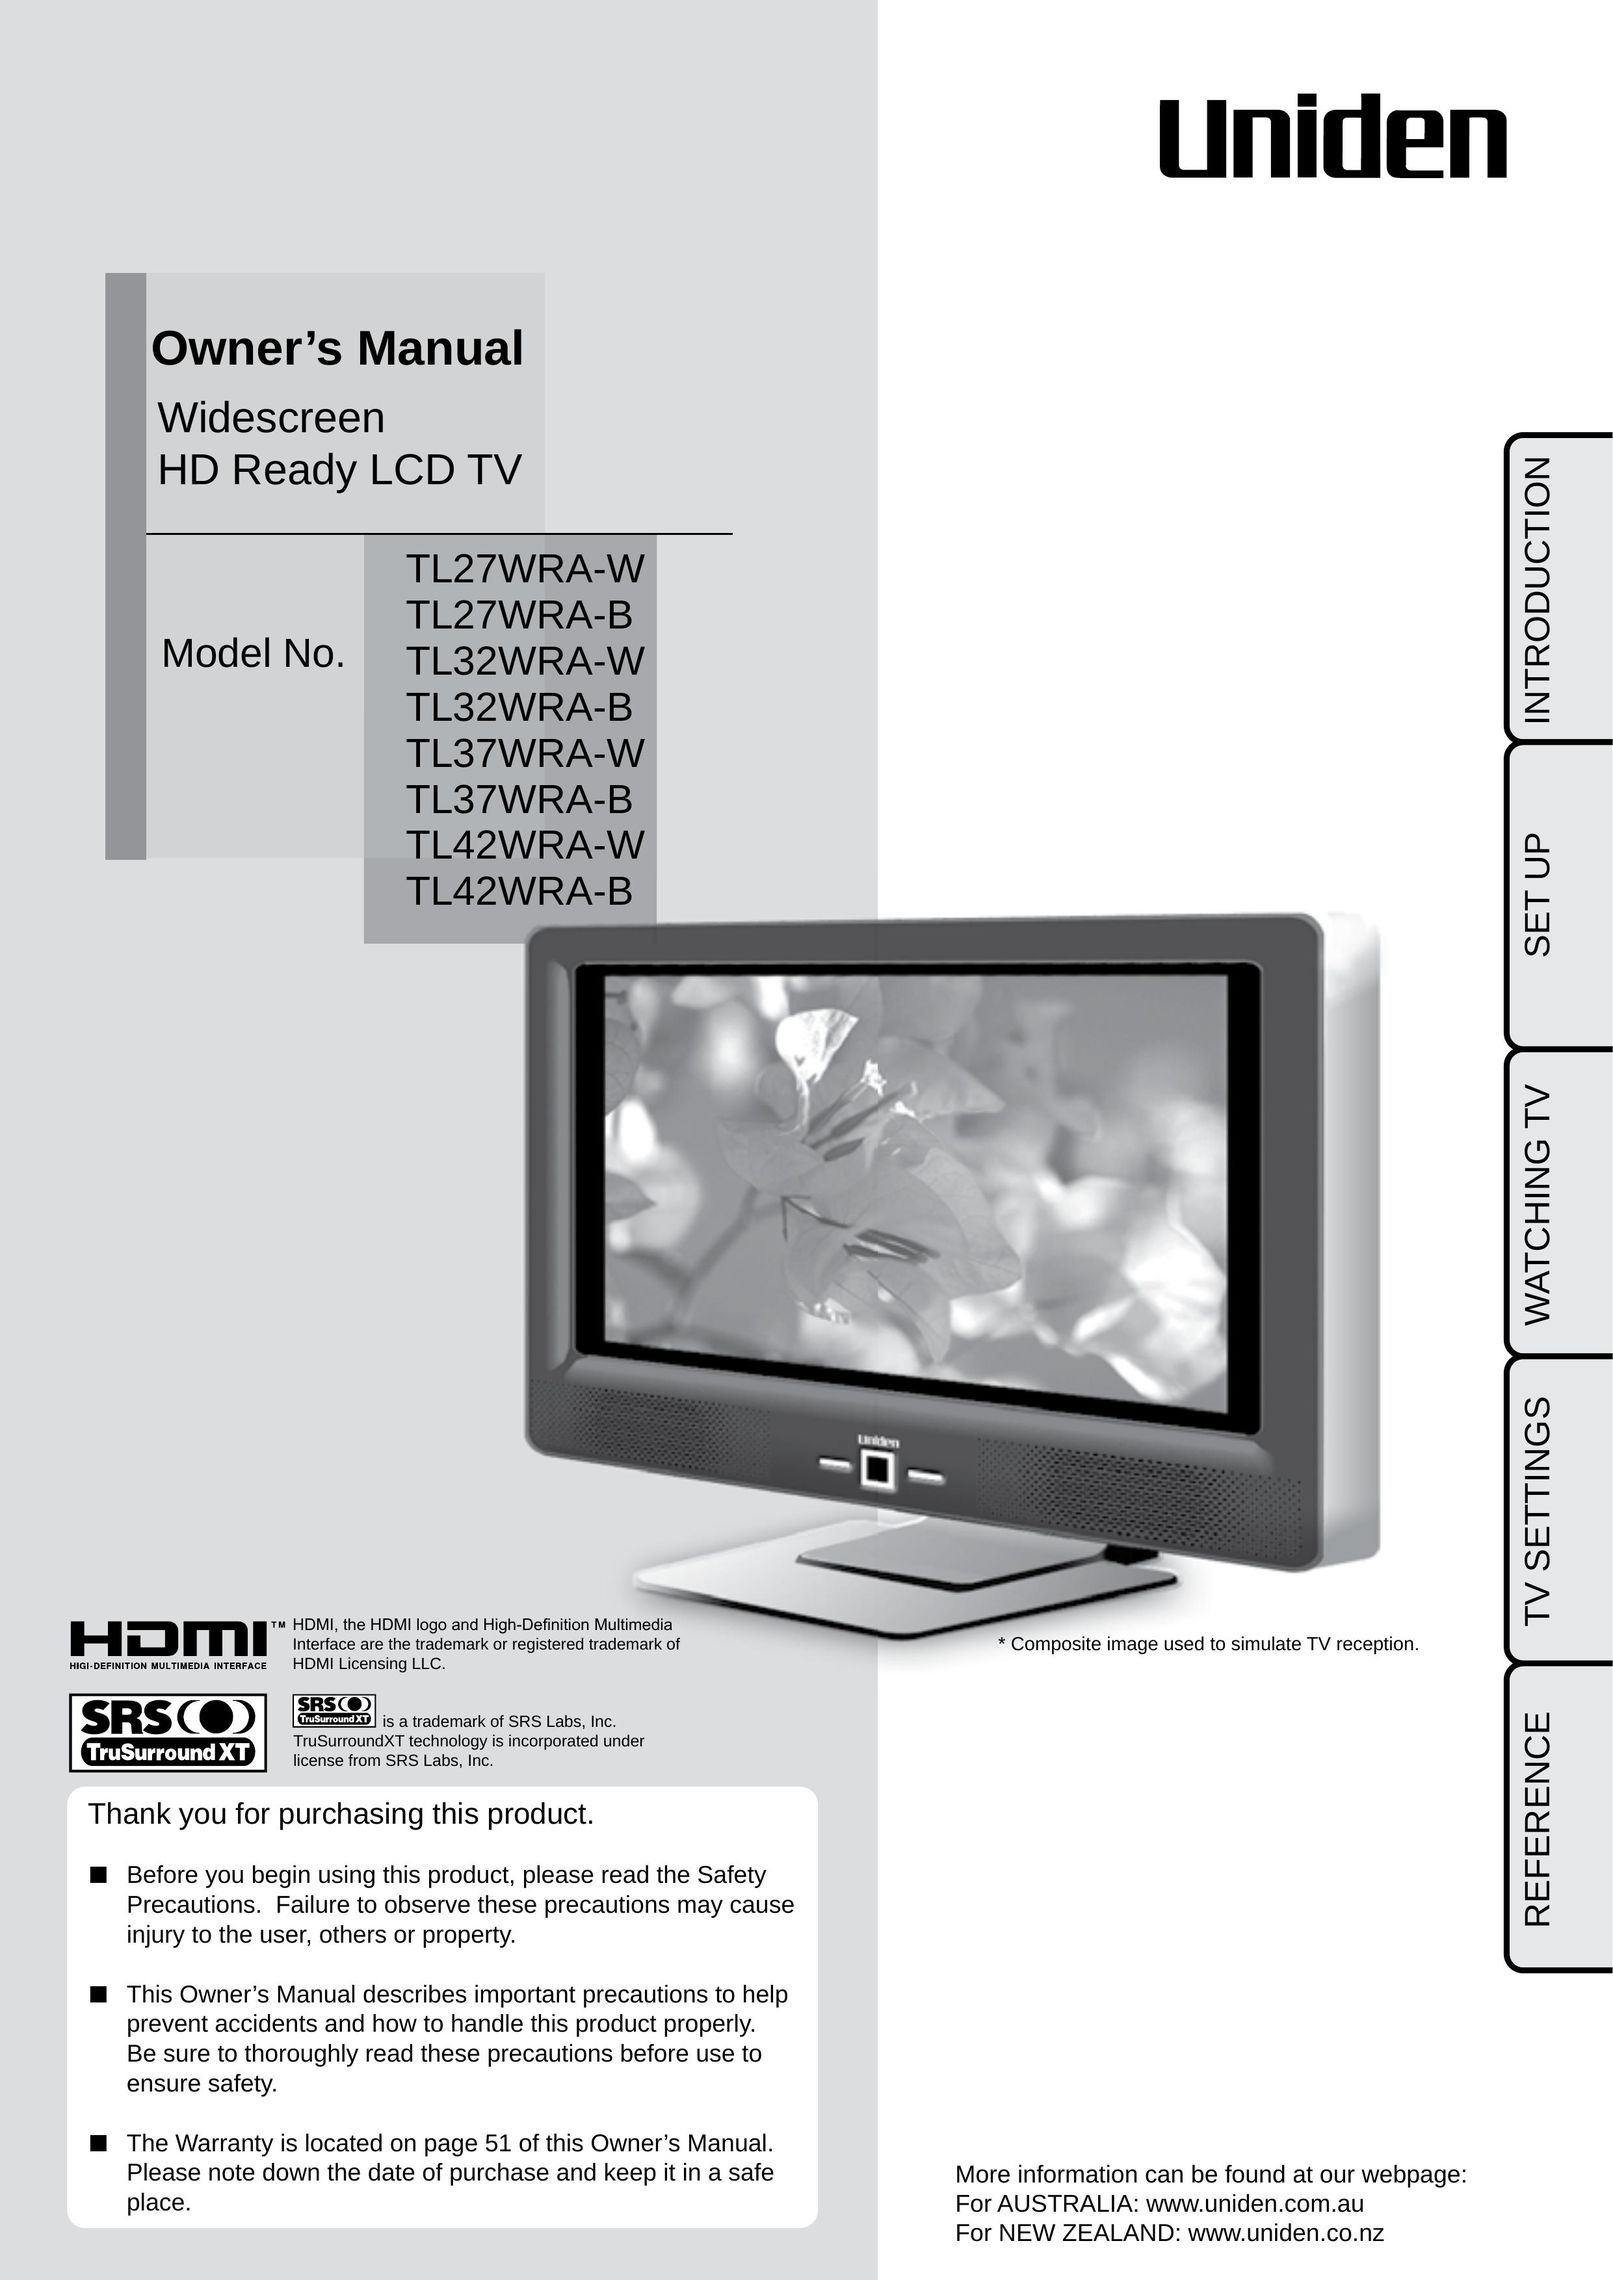 Uniden TL37WRA-B Flat Panel Television User Manual